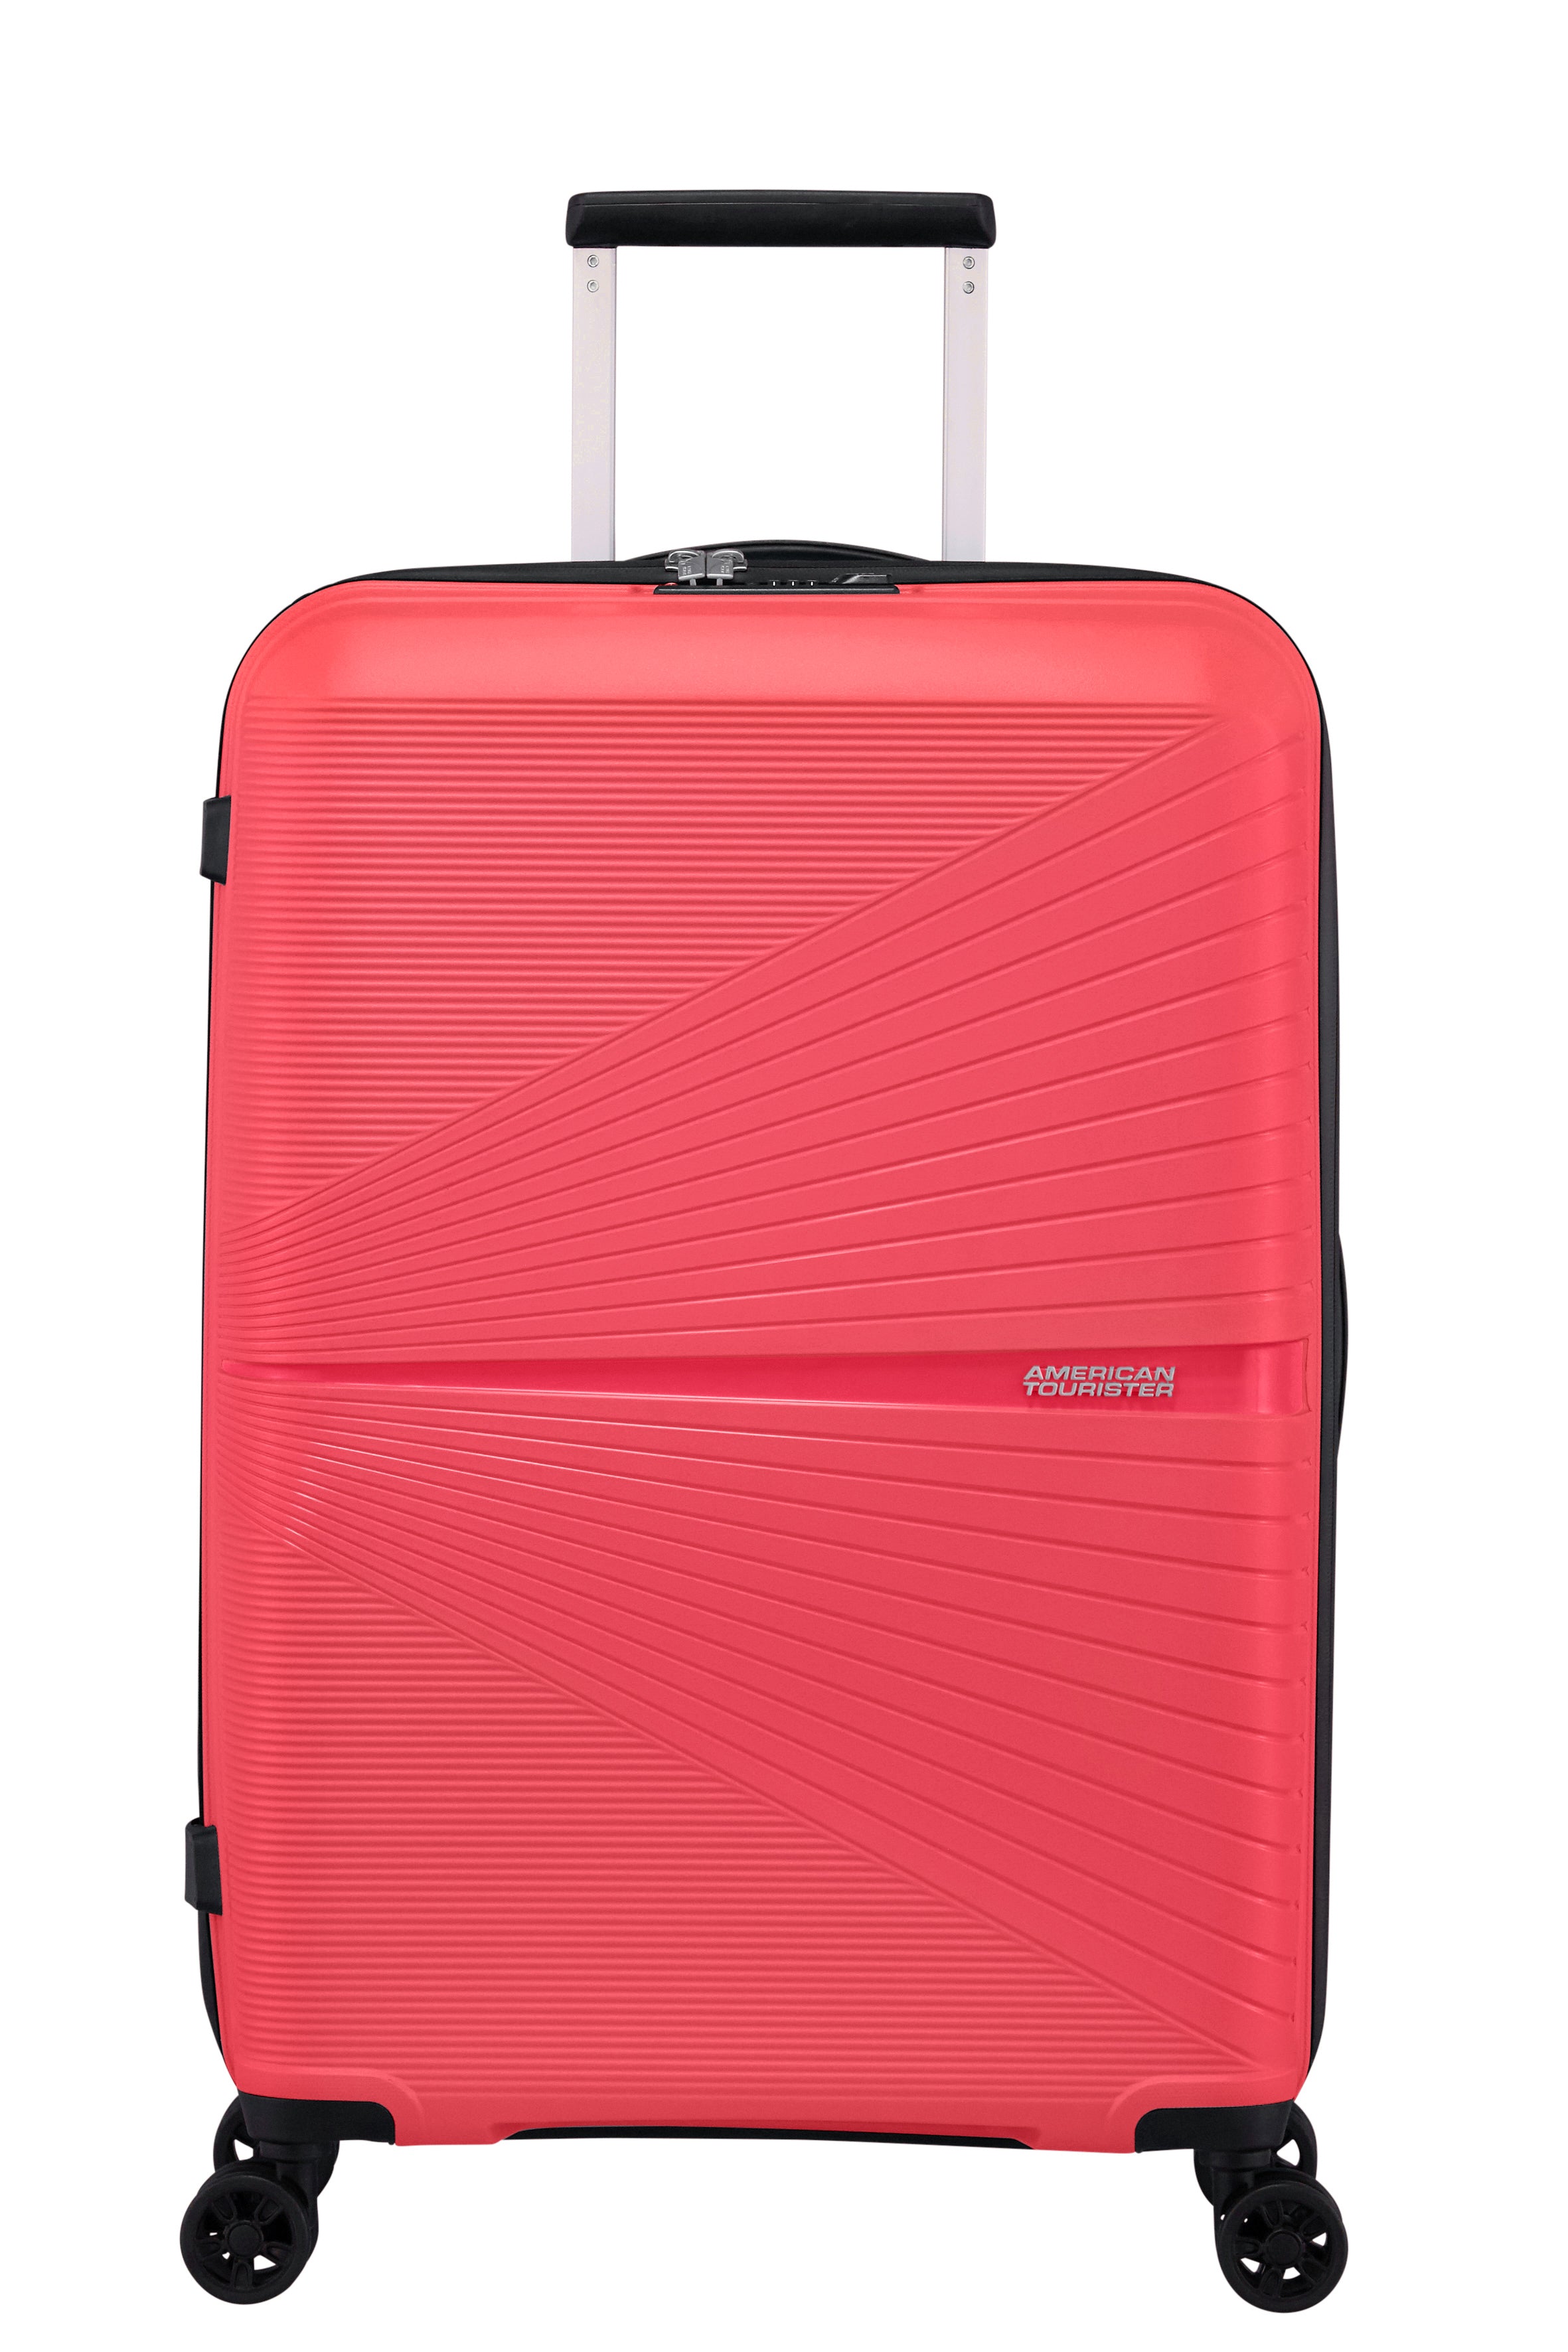 American Tourister - Airconic 67cm Medium 4 Wheel Hard Suitcase - Paradise Pink-7